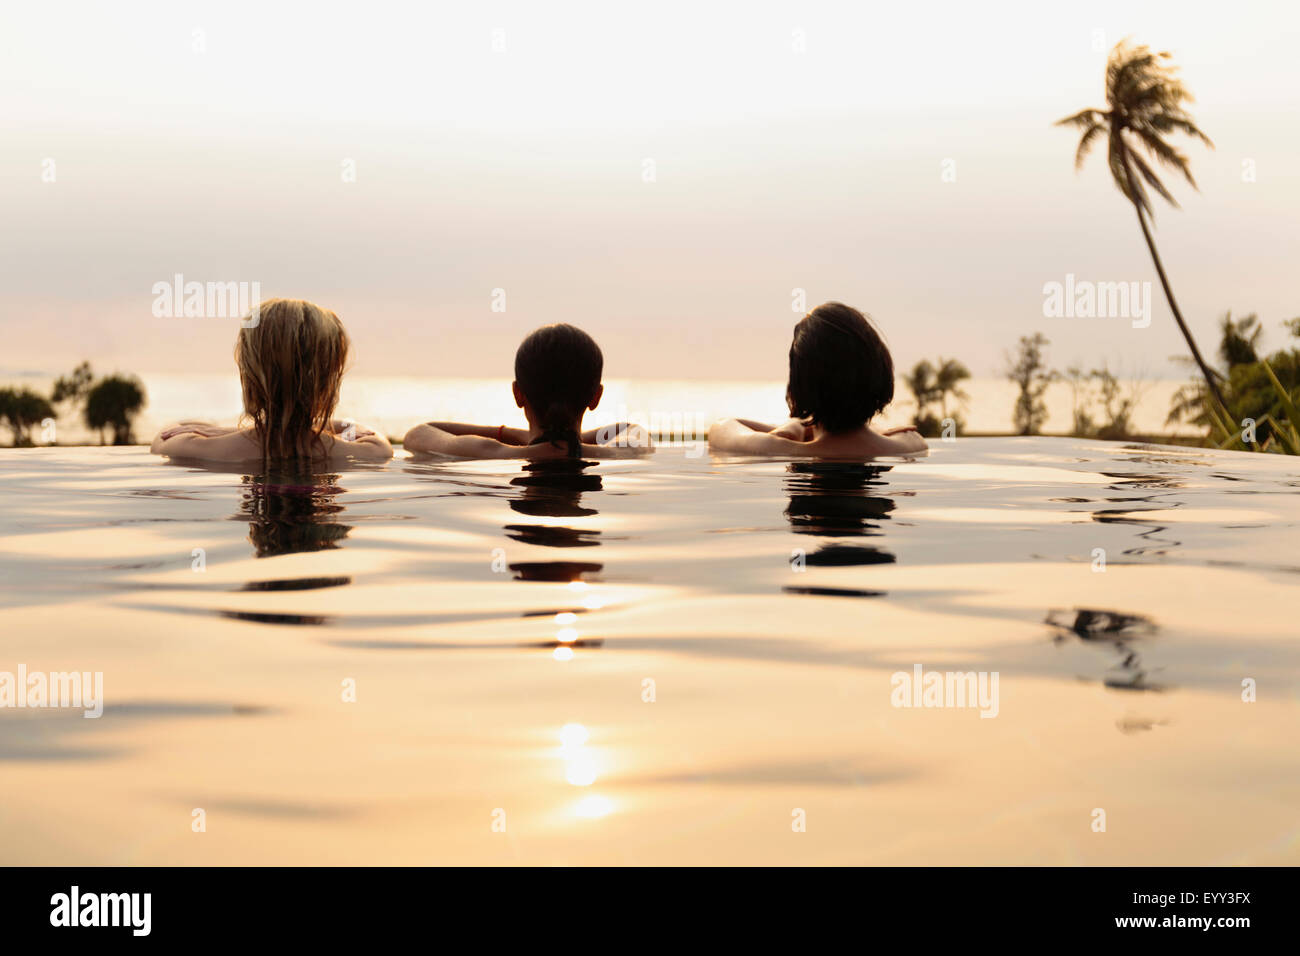 Women admiring scenic view in infinity pool Stock Photo